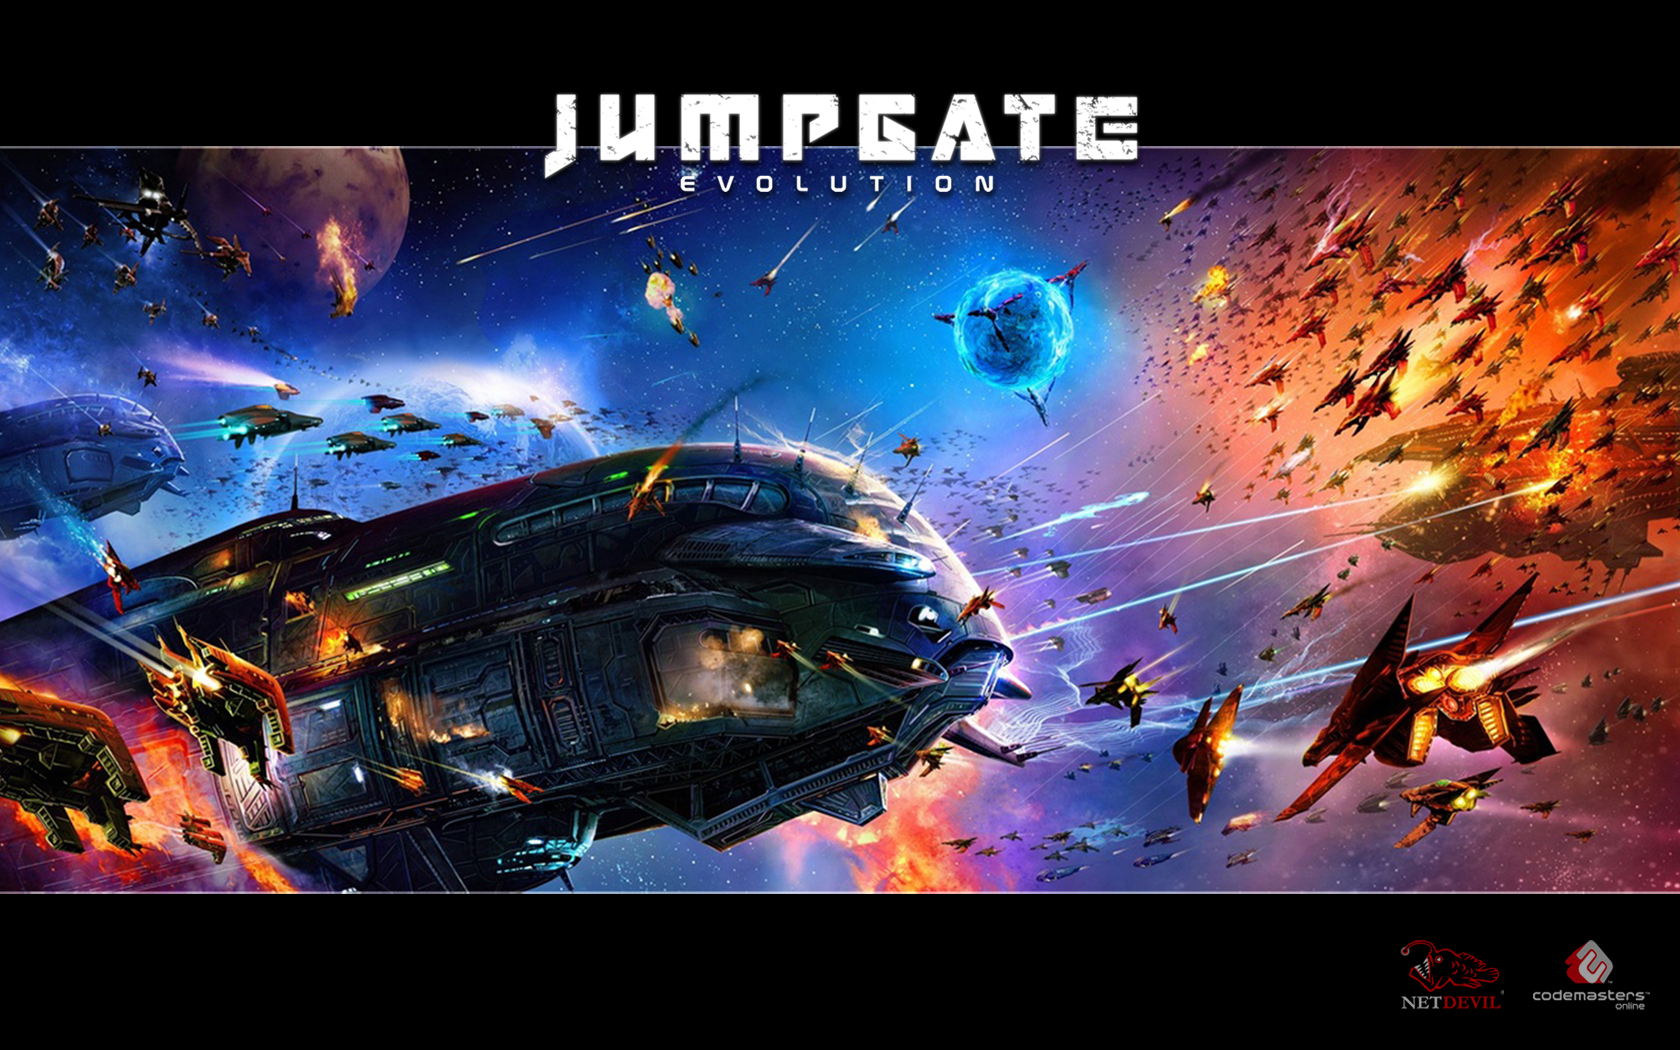 Jumpgate Evolution #16